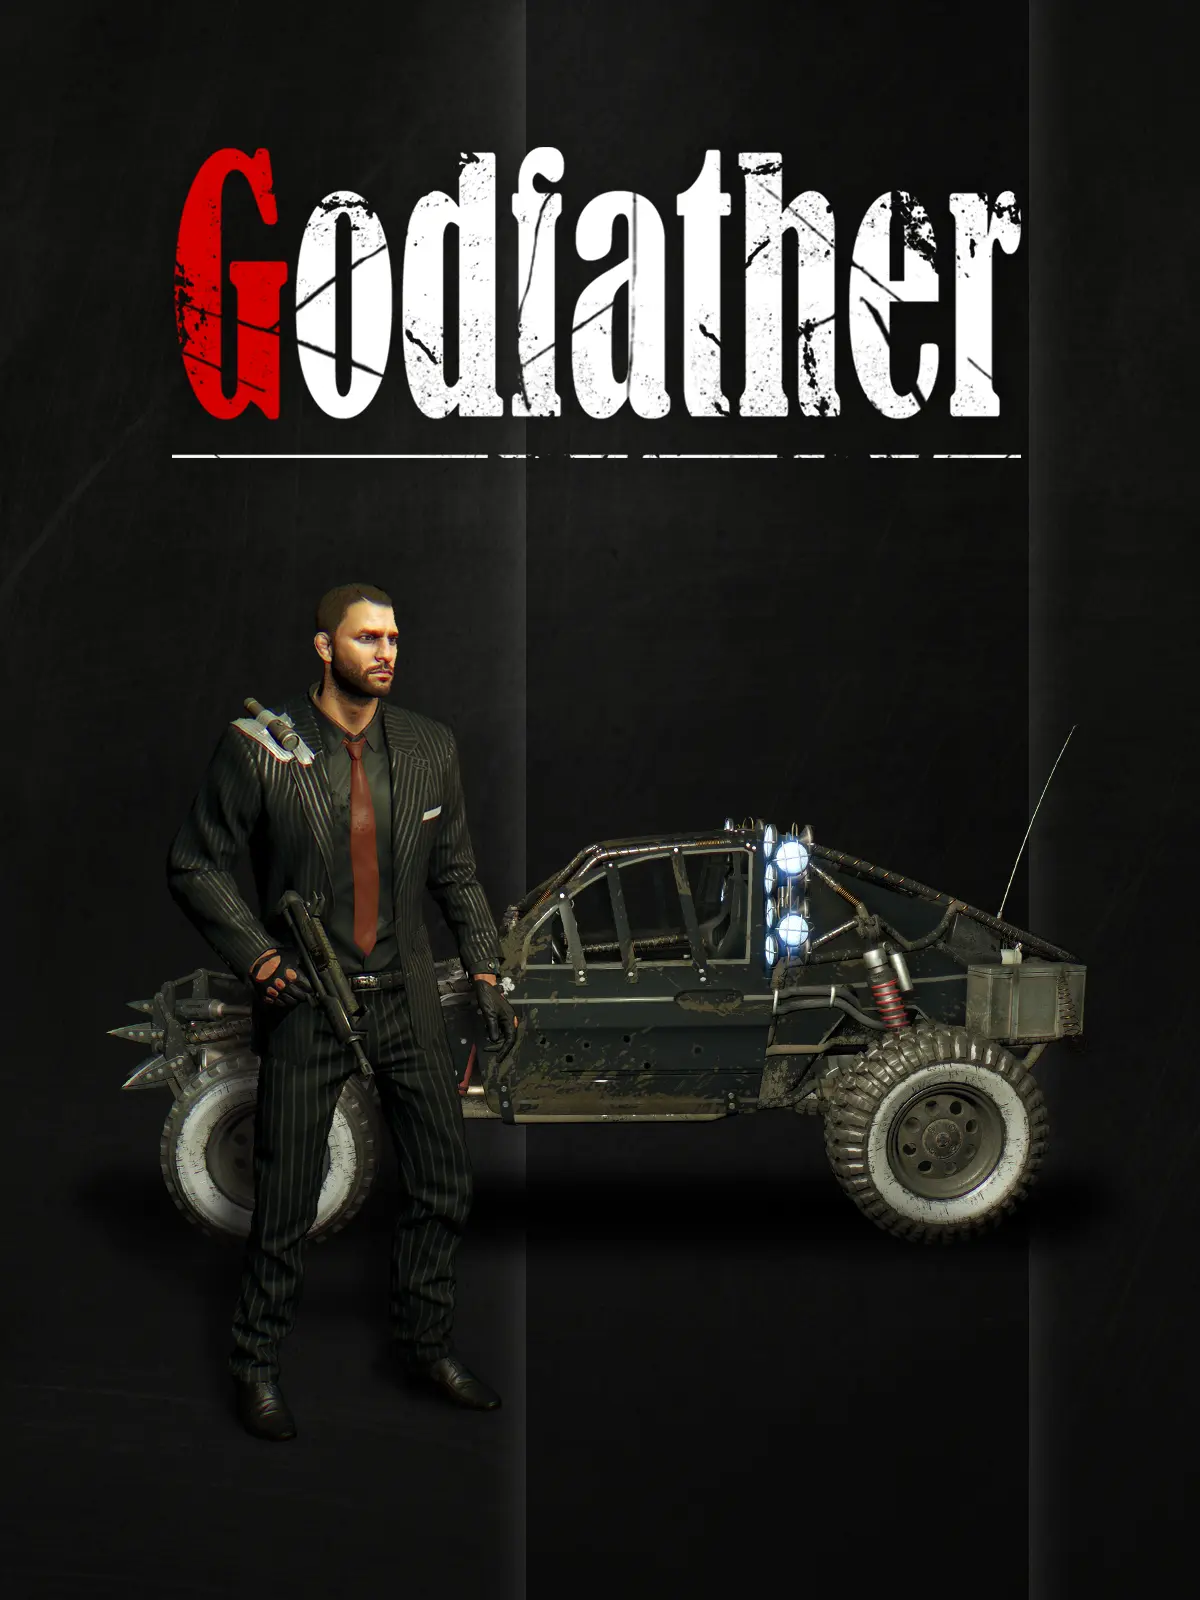 Dying Light - Godfather Bundle DLC (PC / Mac / Linux) - Steam - Digital Code